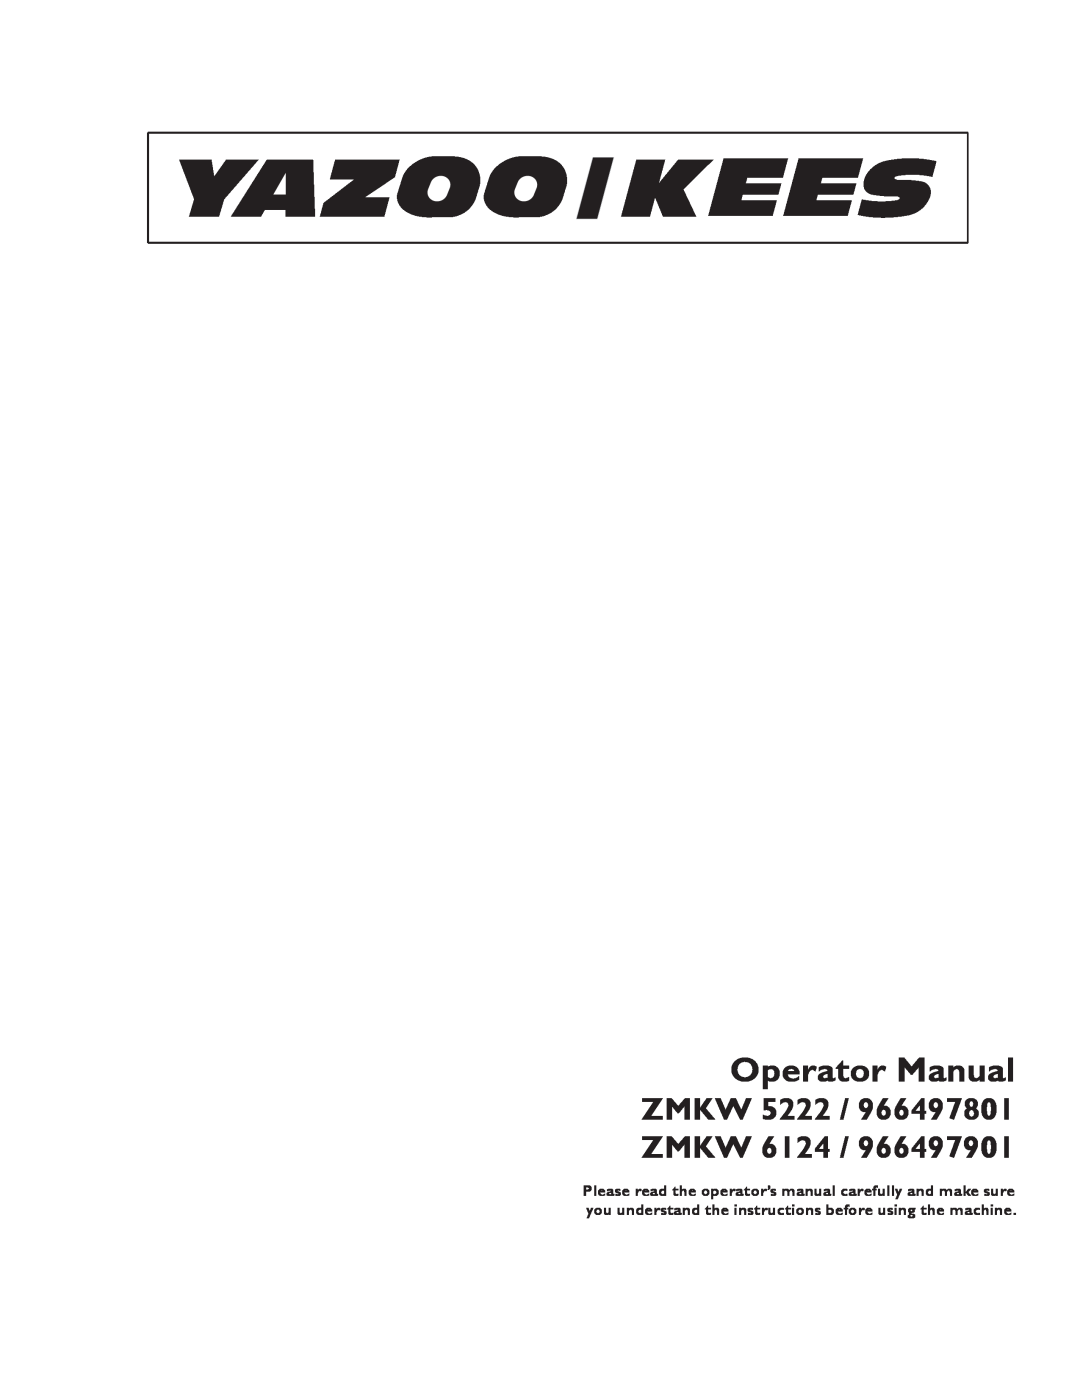 Yazoo/Kees manual Operator Manual, ZMKW 5222 / 966497801 ZMKW 6124 